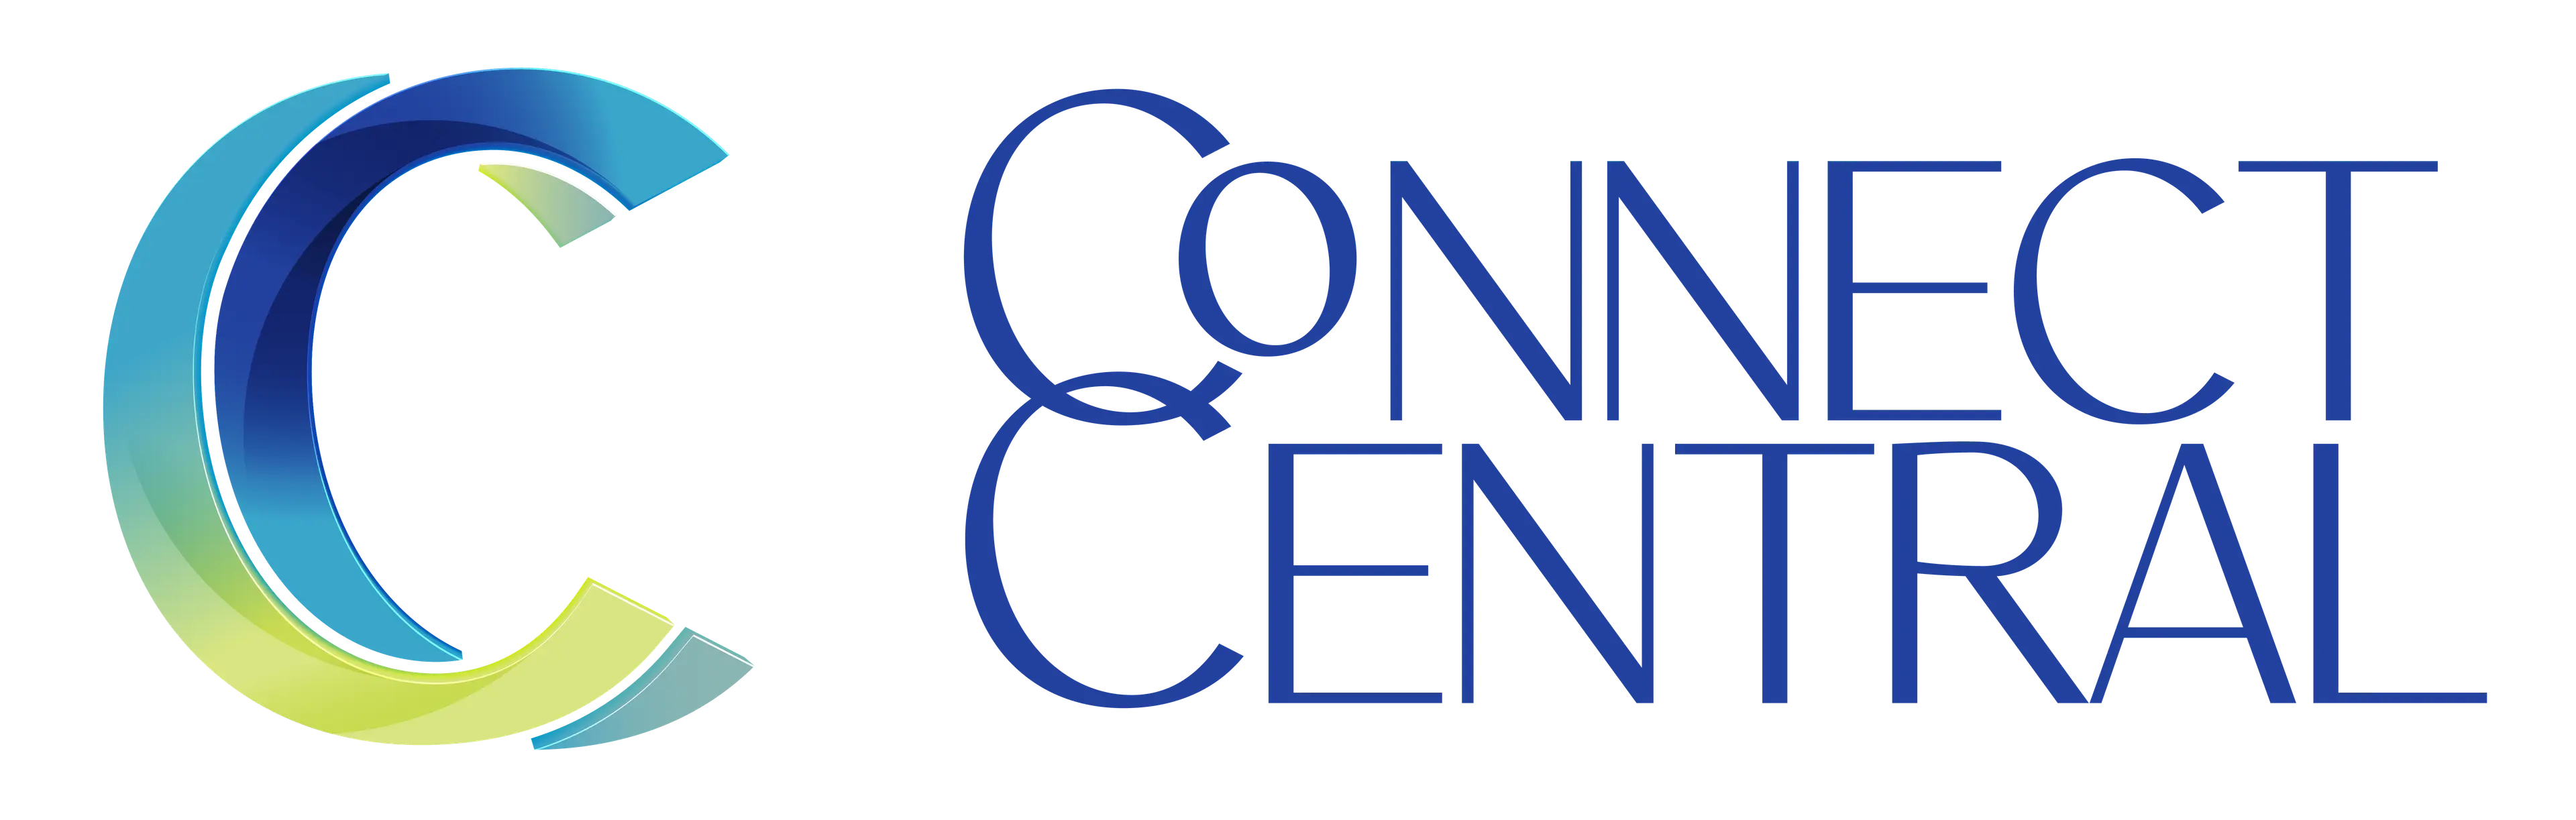 Visit our sponsor Connect Central